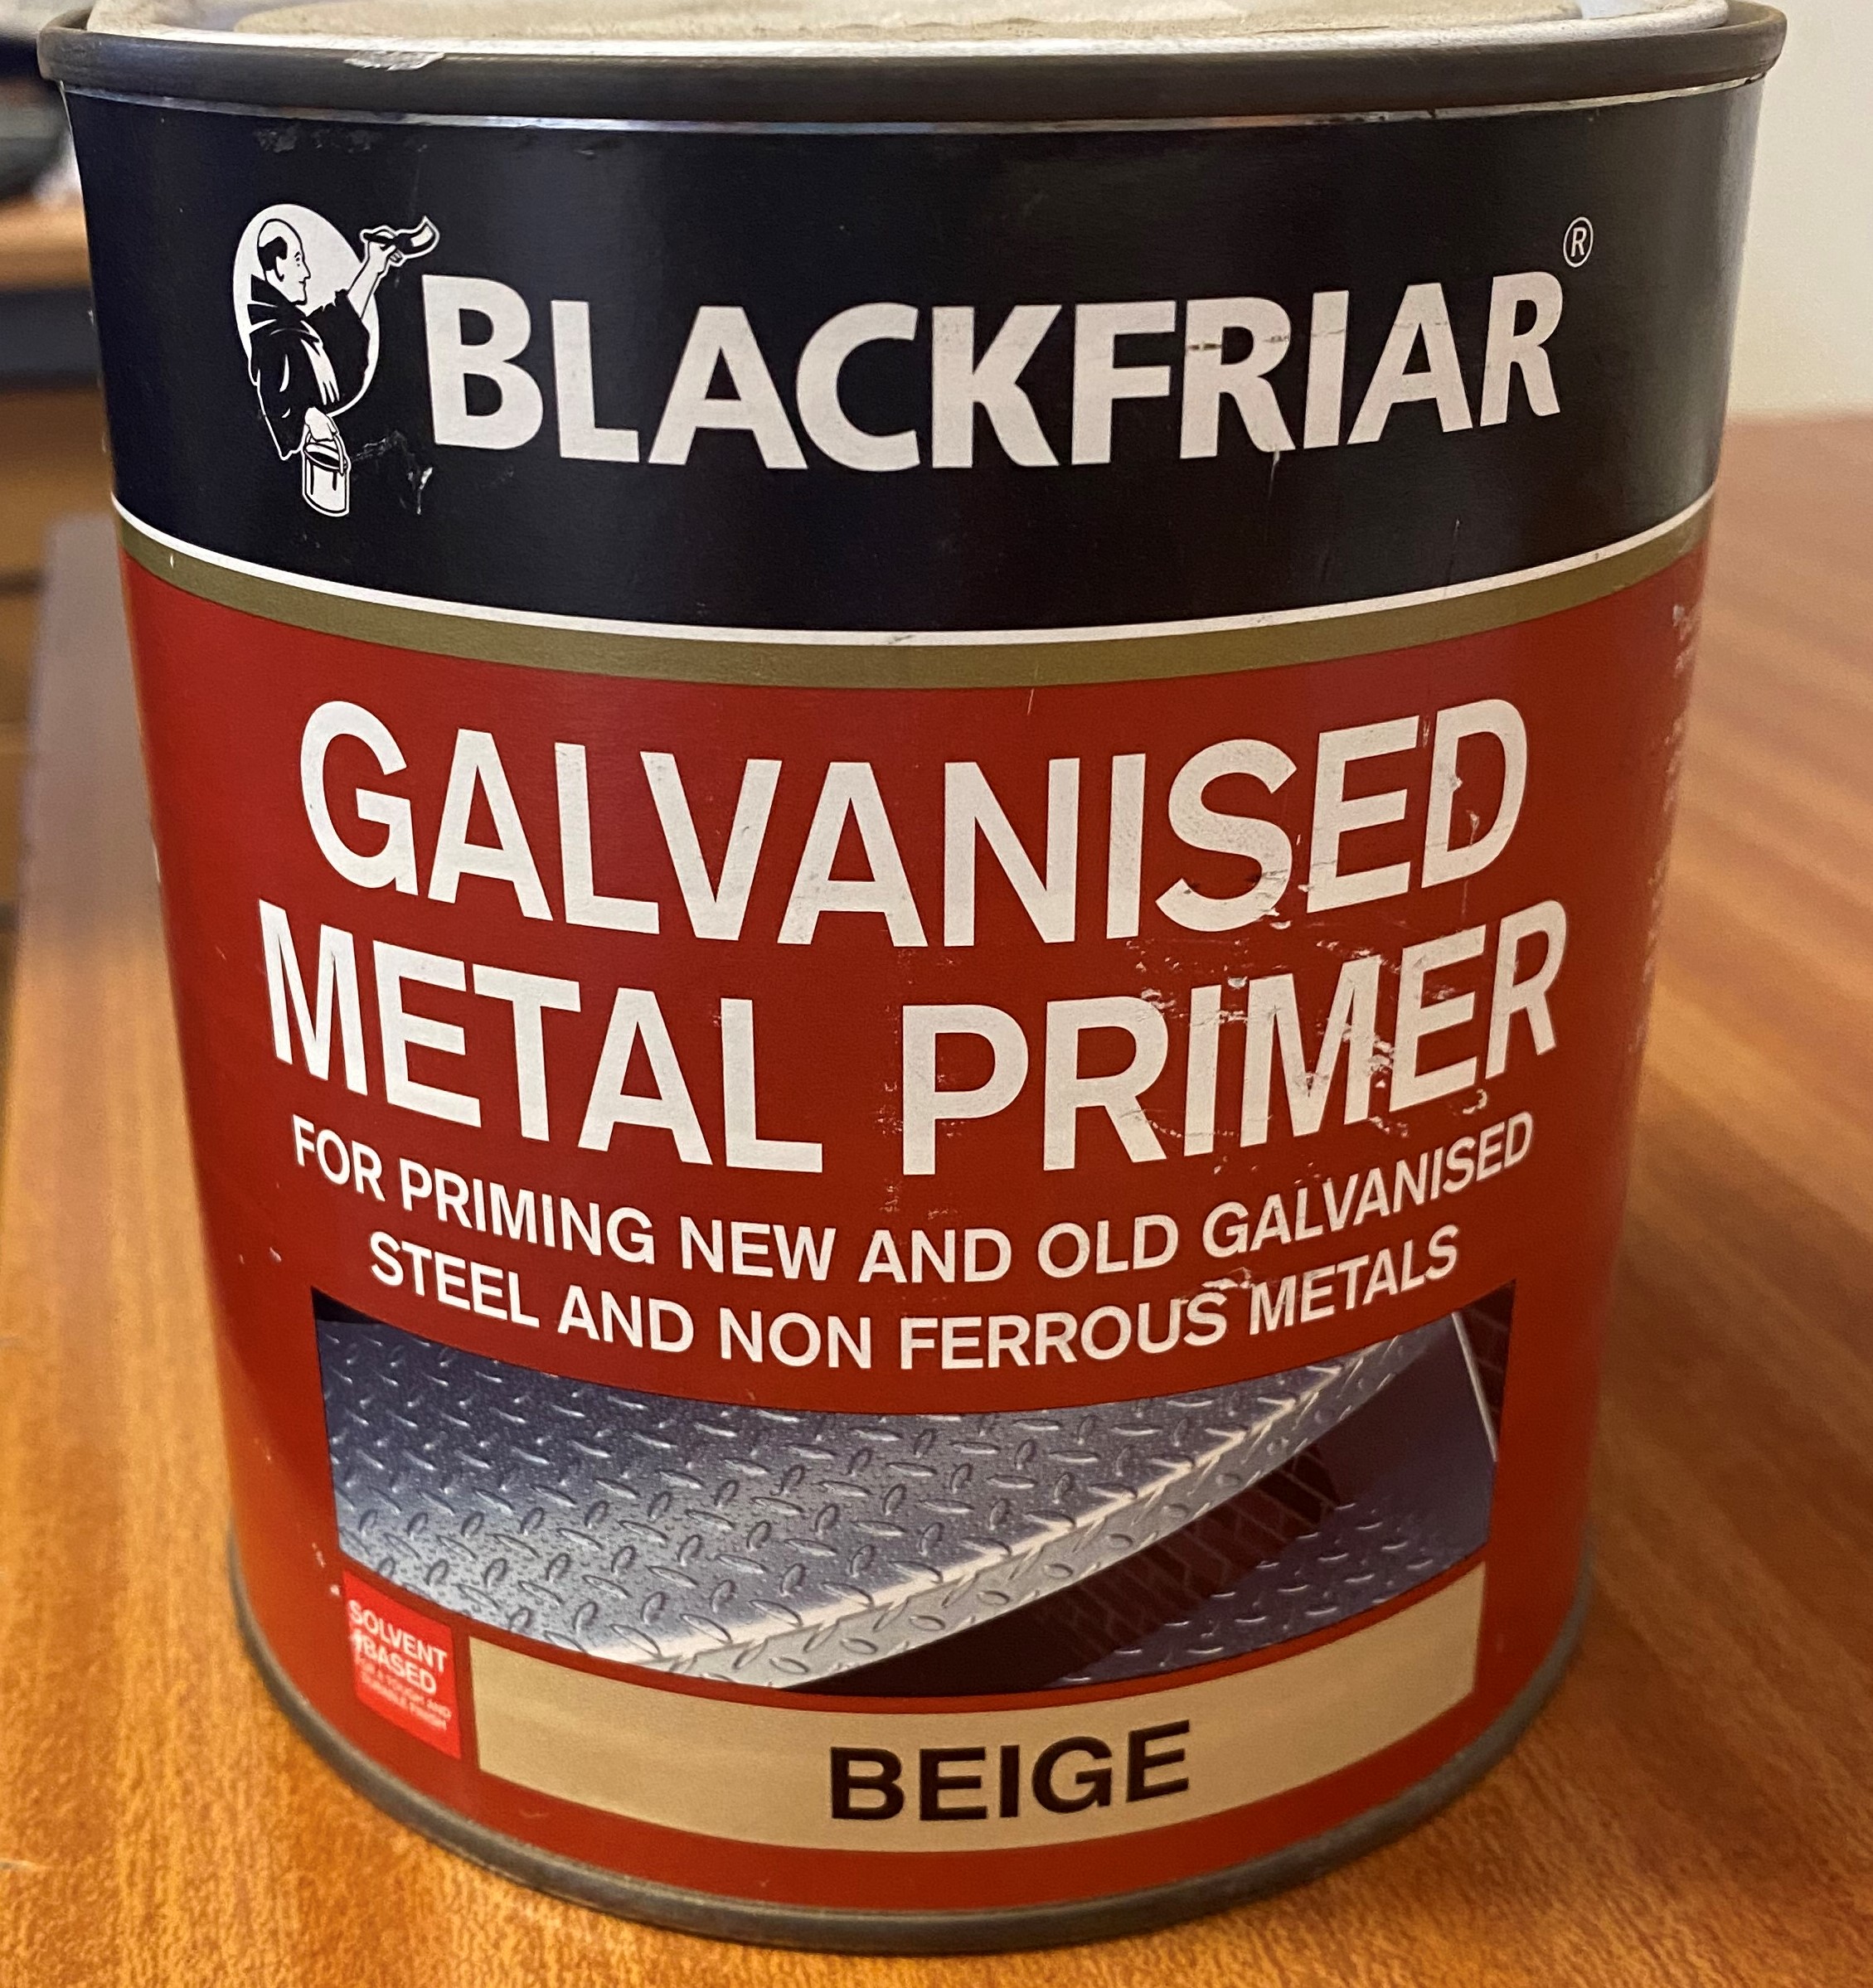 BLACKFRIAR GALVANISING PRIMER BEIGE £3.19-£5.81